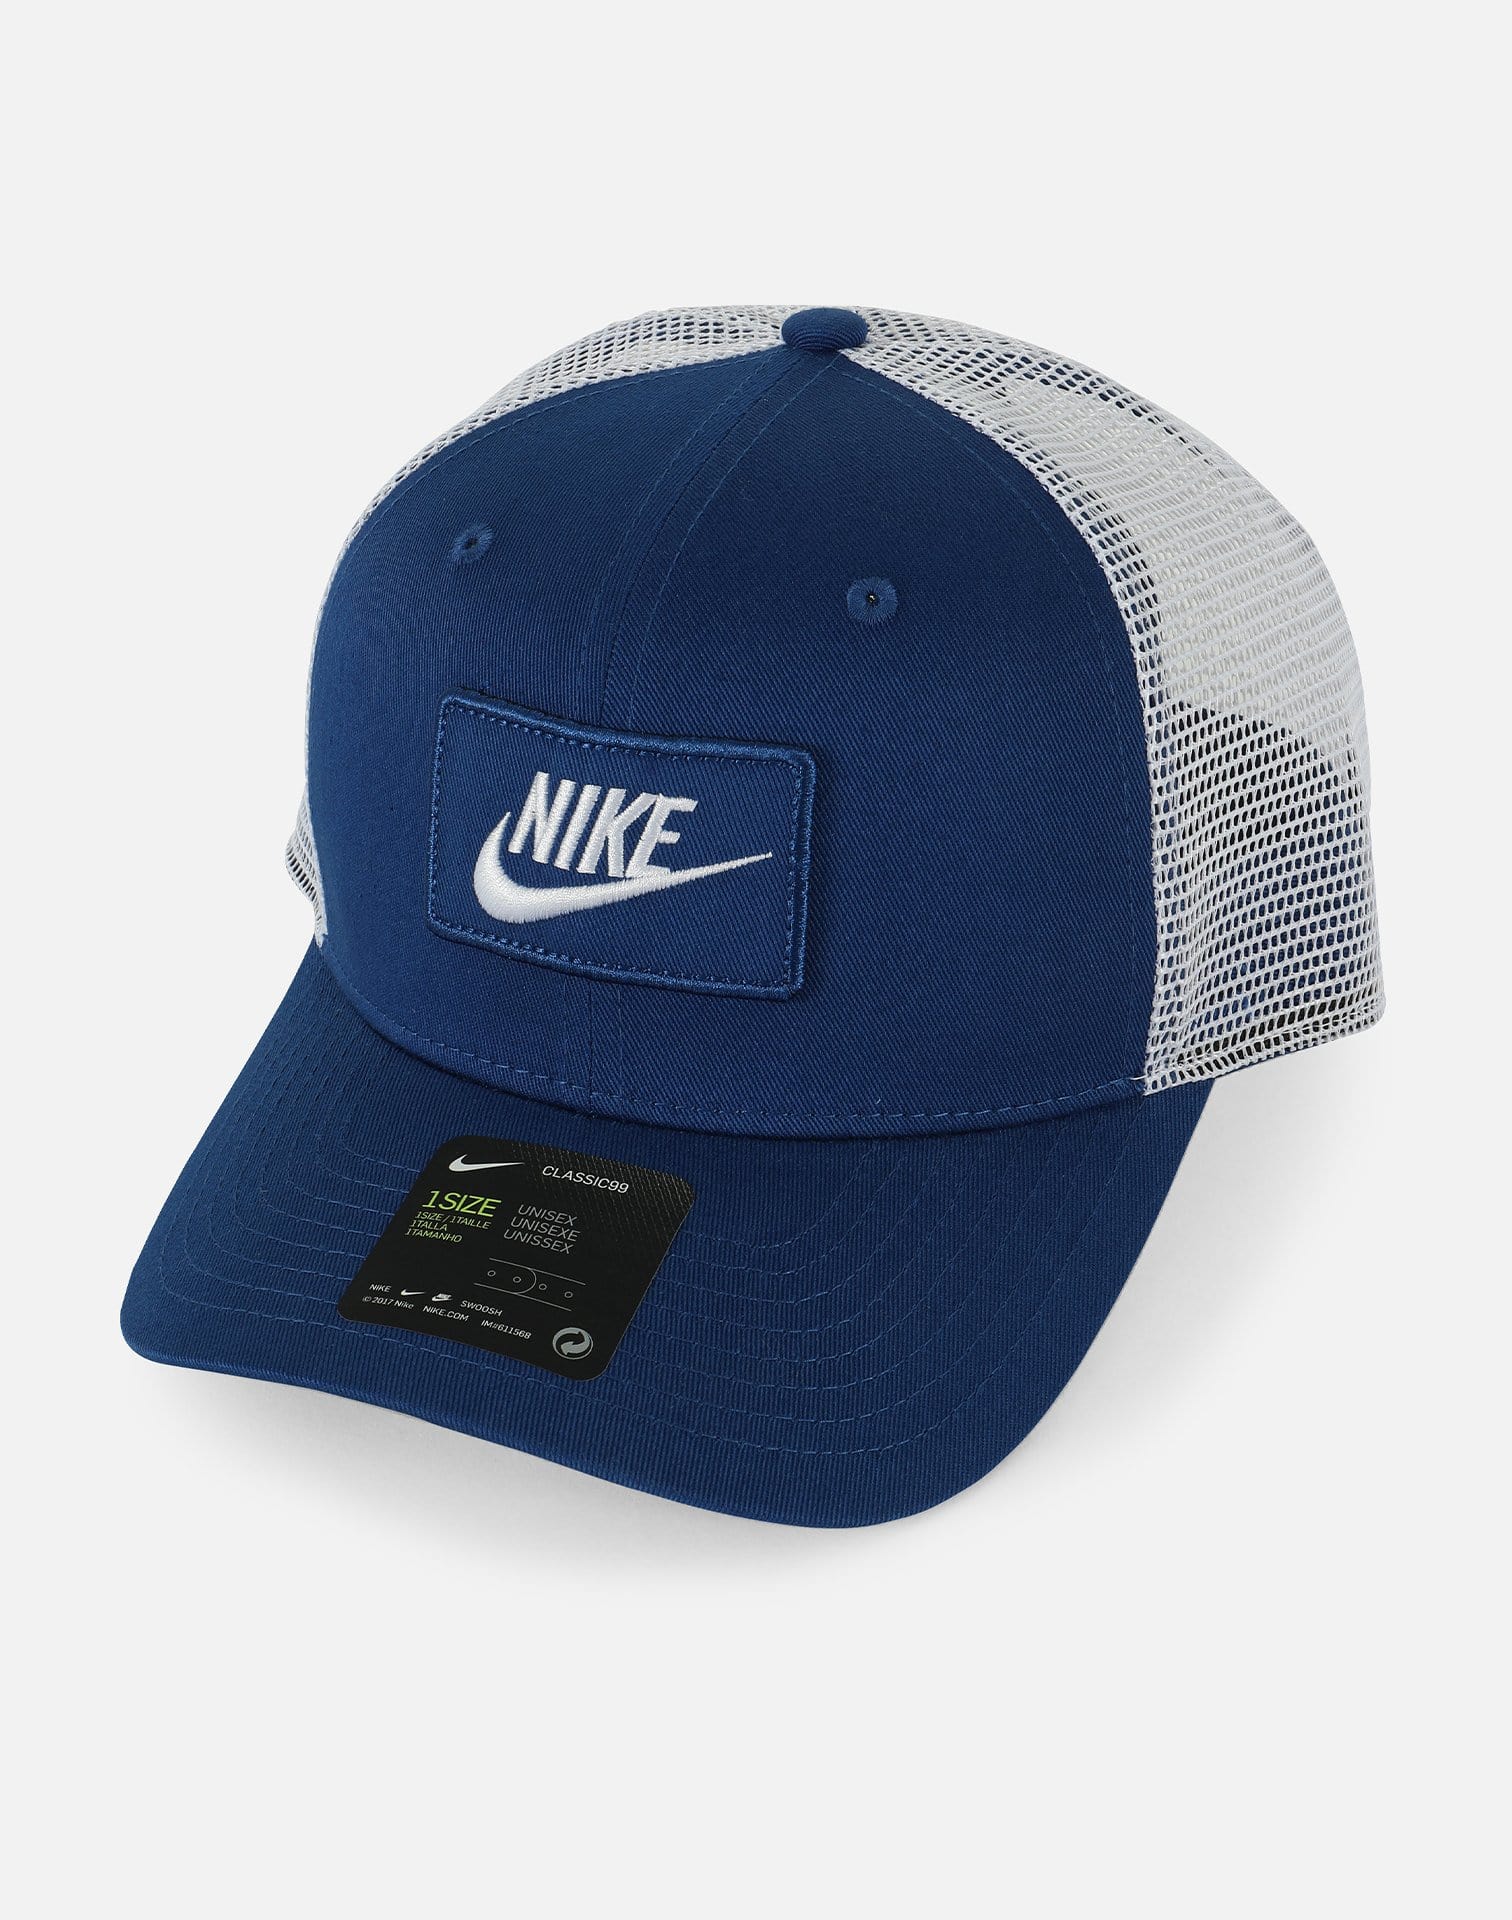 nike classic 99 trucker hat